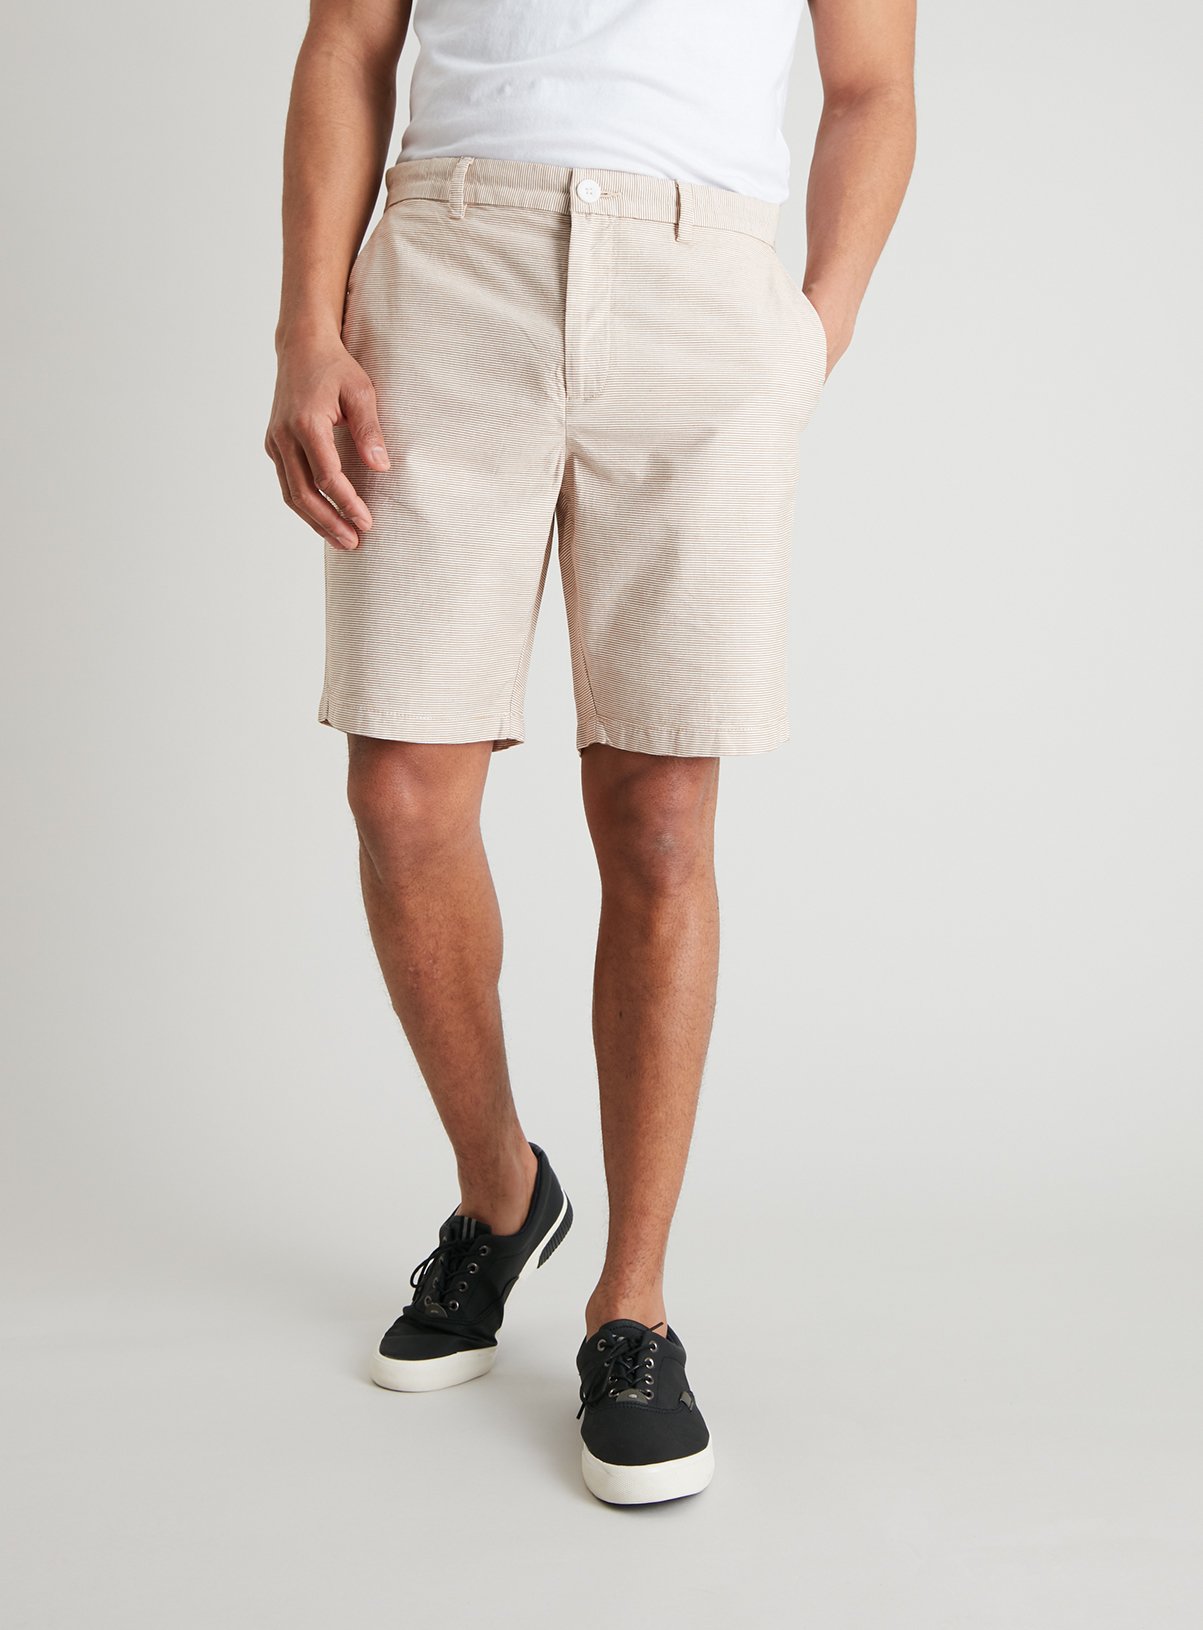 Ochre & Cream Fine Stripe Smart Shorts Review